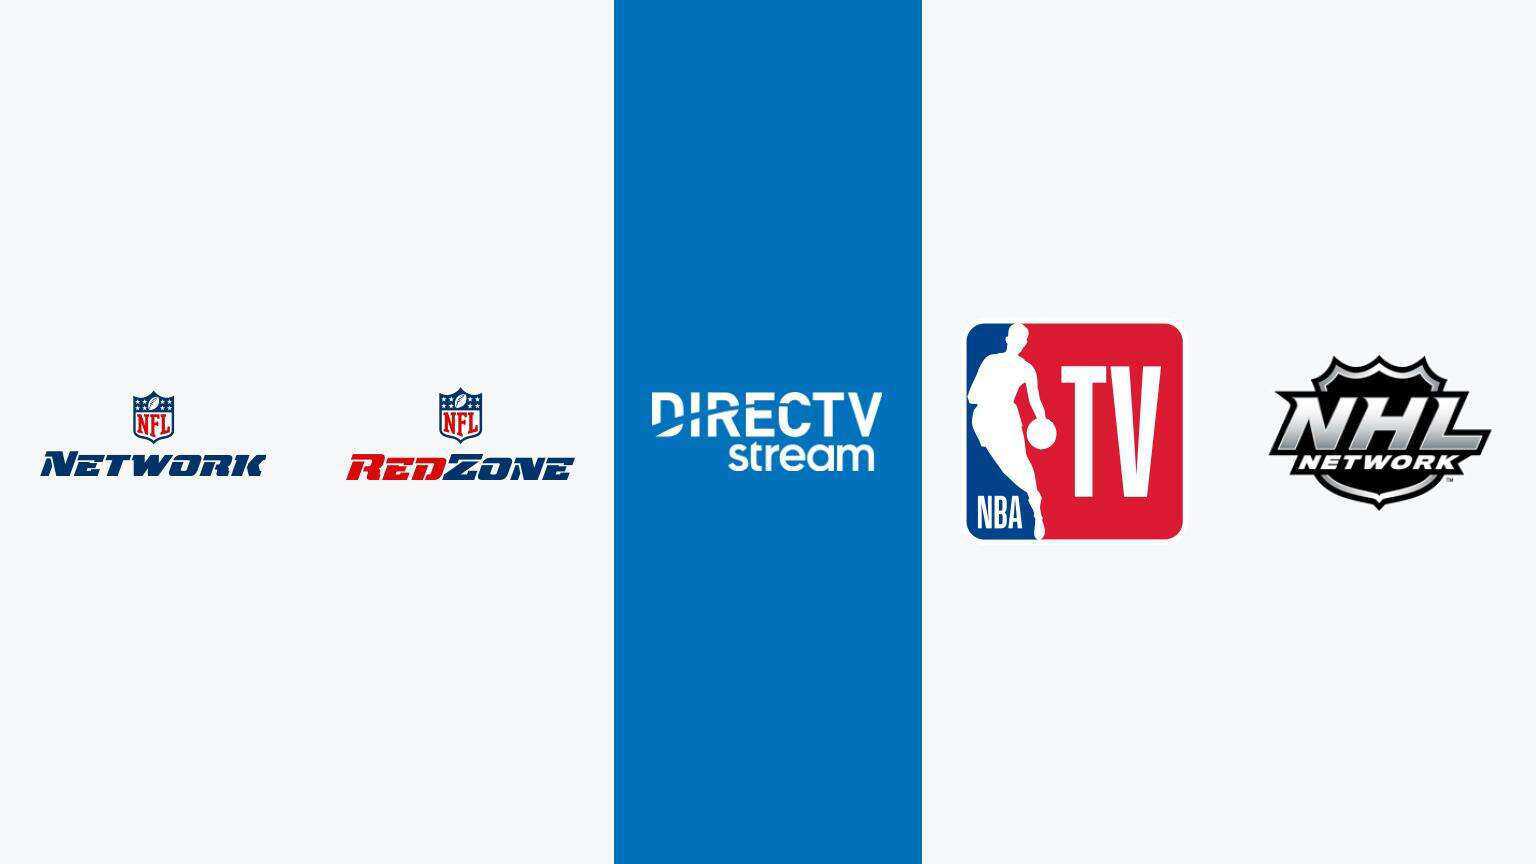 nfl network directv stream